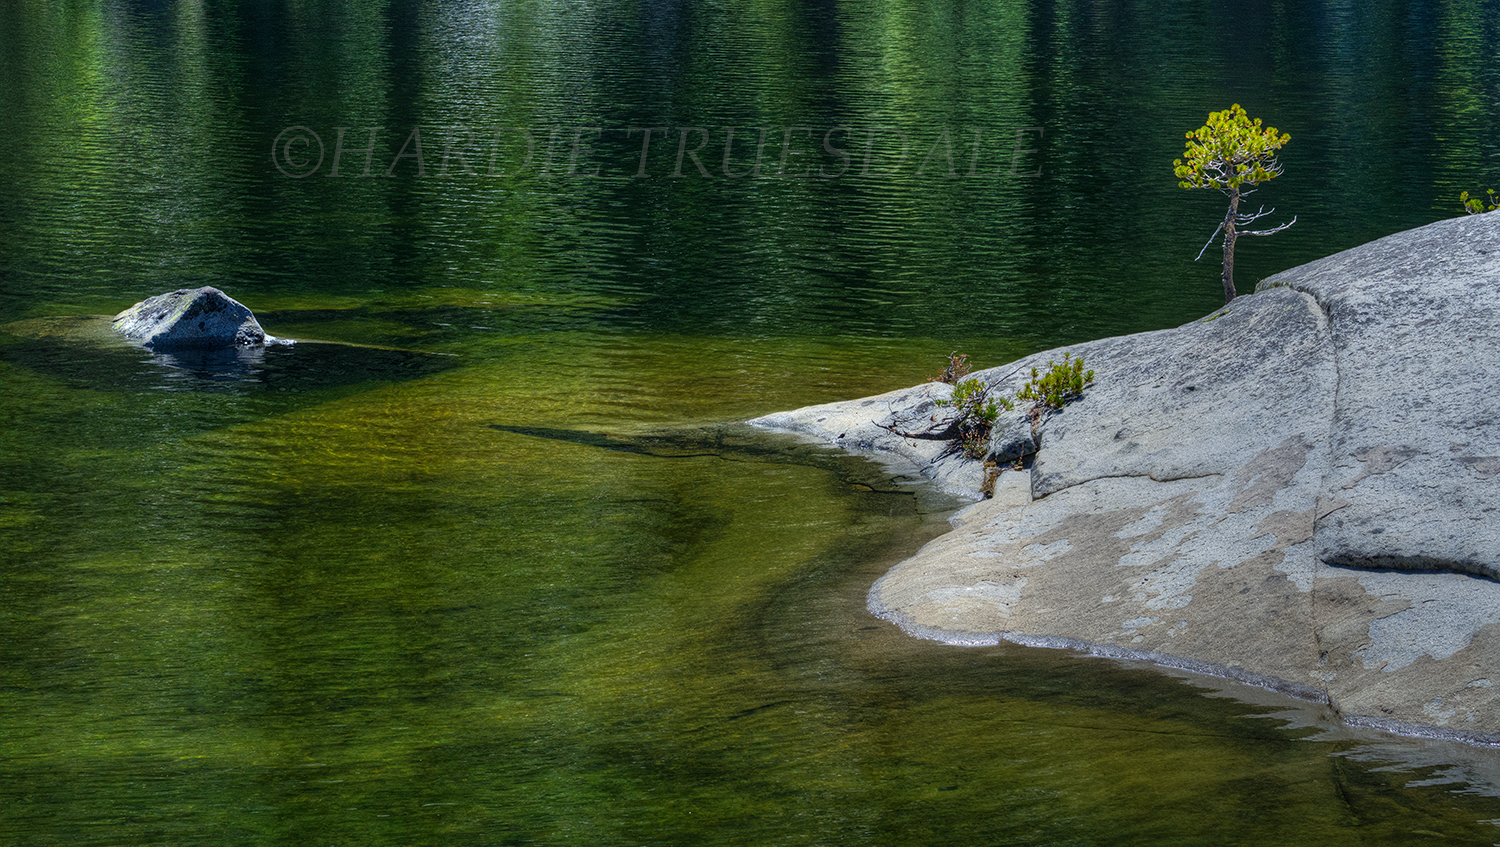 CA#156 "Granite and Lake Azure, Deasolation Wilderness"